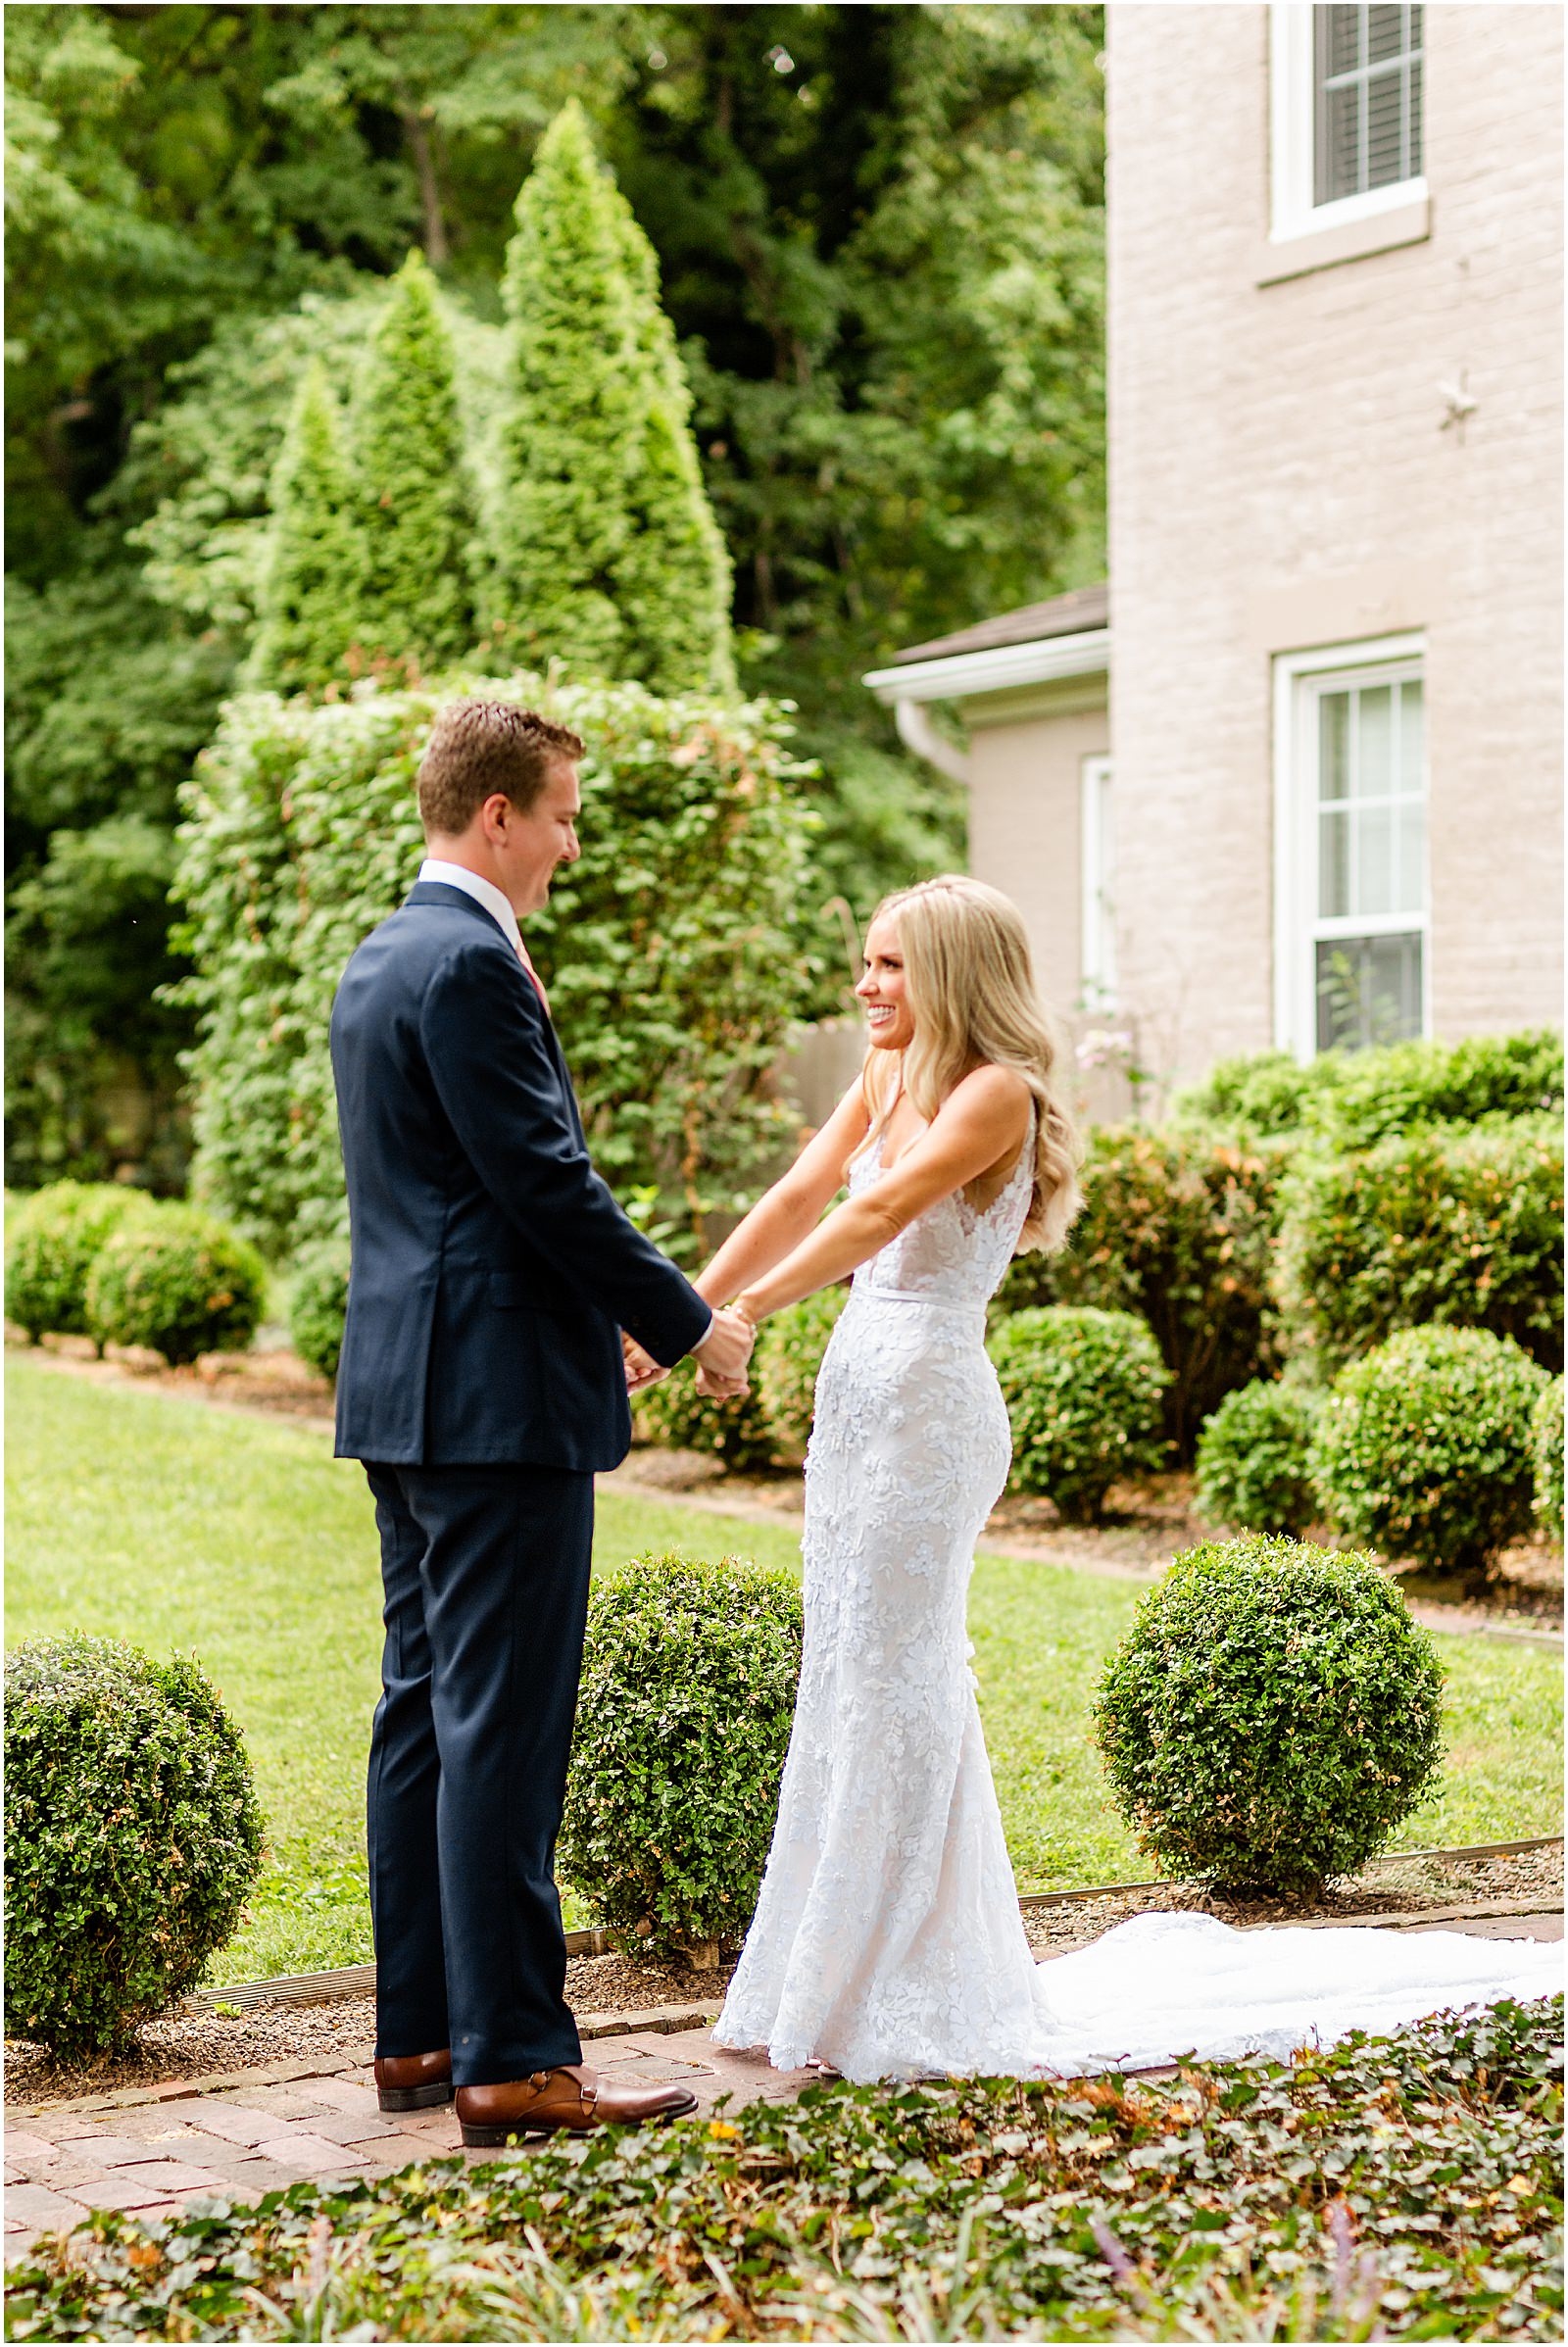 An Evansville Country Club Wedding | Madison and Christiaan | Bret and Brandie | Evansville Photographers | @bretandbrandie-0086.jpg